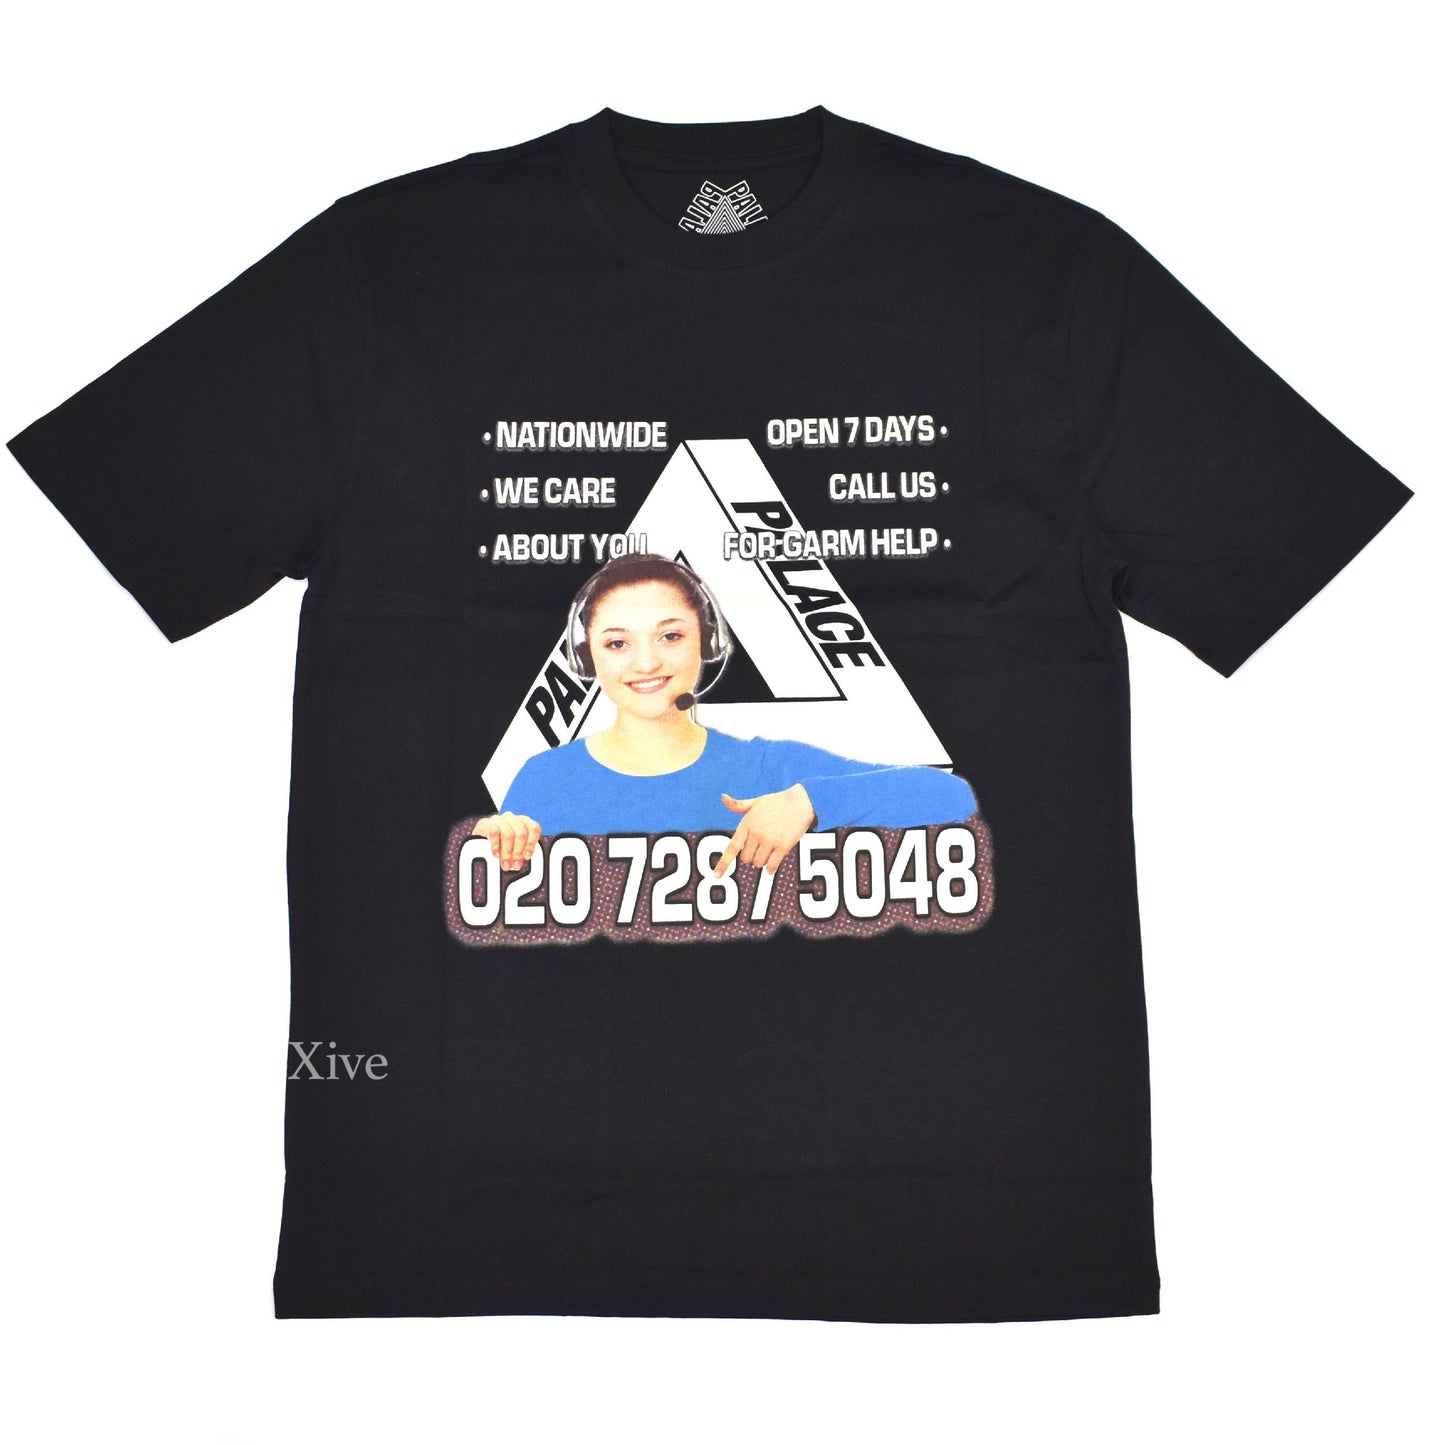 Palace - Bell Man Tri-Ferg Logo Phone Number T-Shirt (Black)